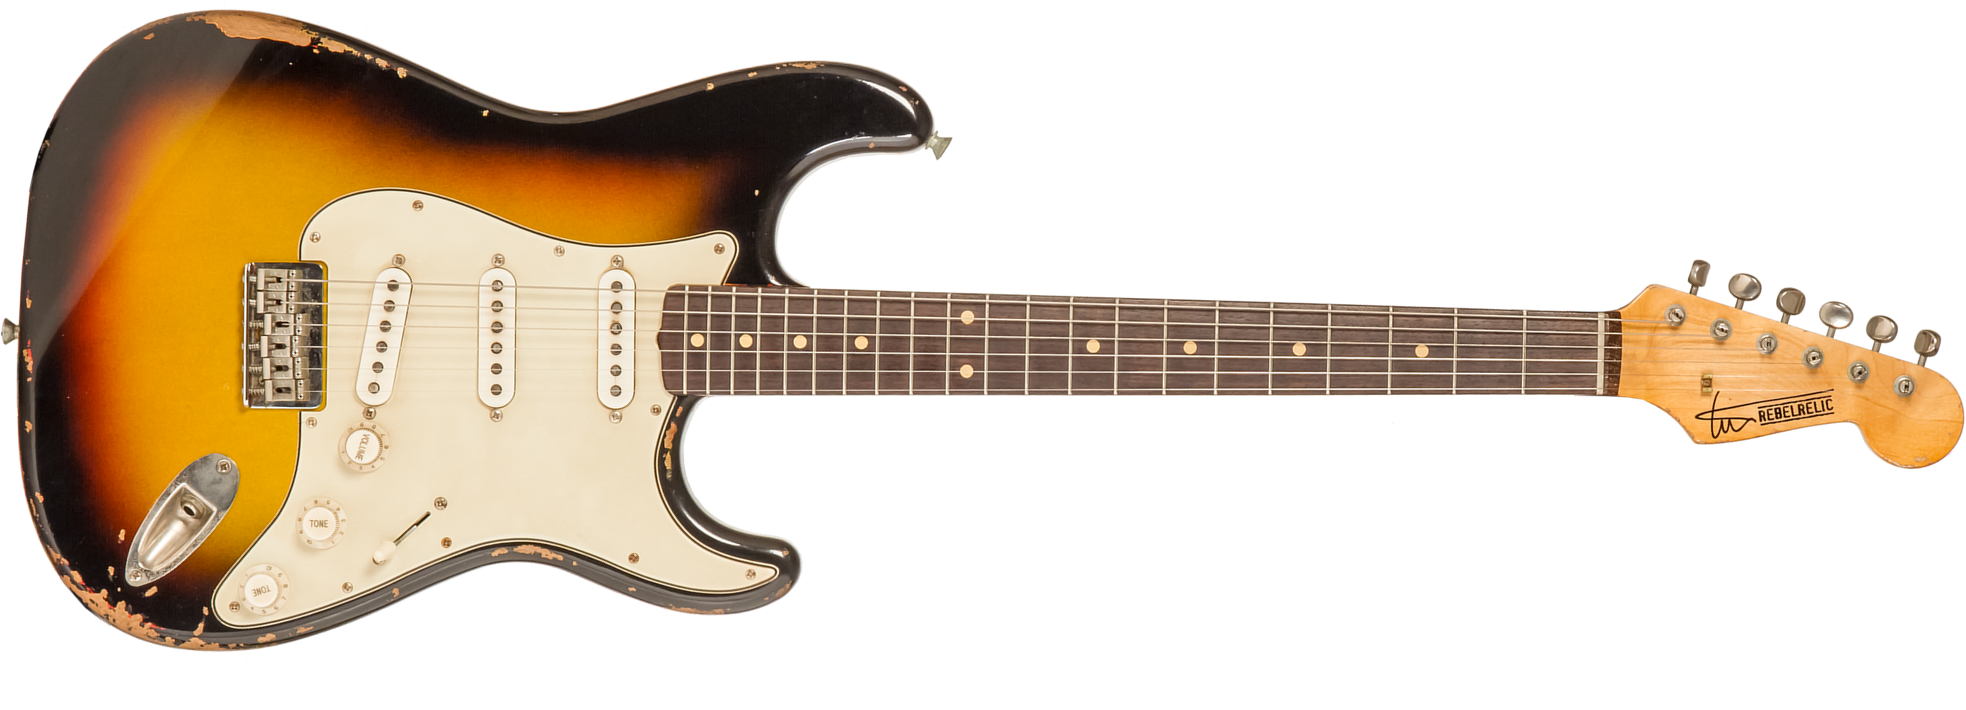 Rebelrelic S-series 1961 Hardtail 3s Ht Rw #231008 - 3-tone Sunburst - Str shape electric guitar - Main picture